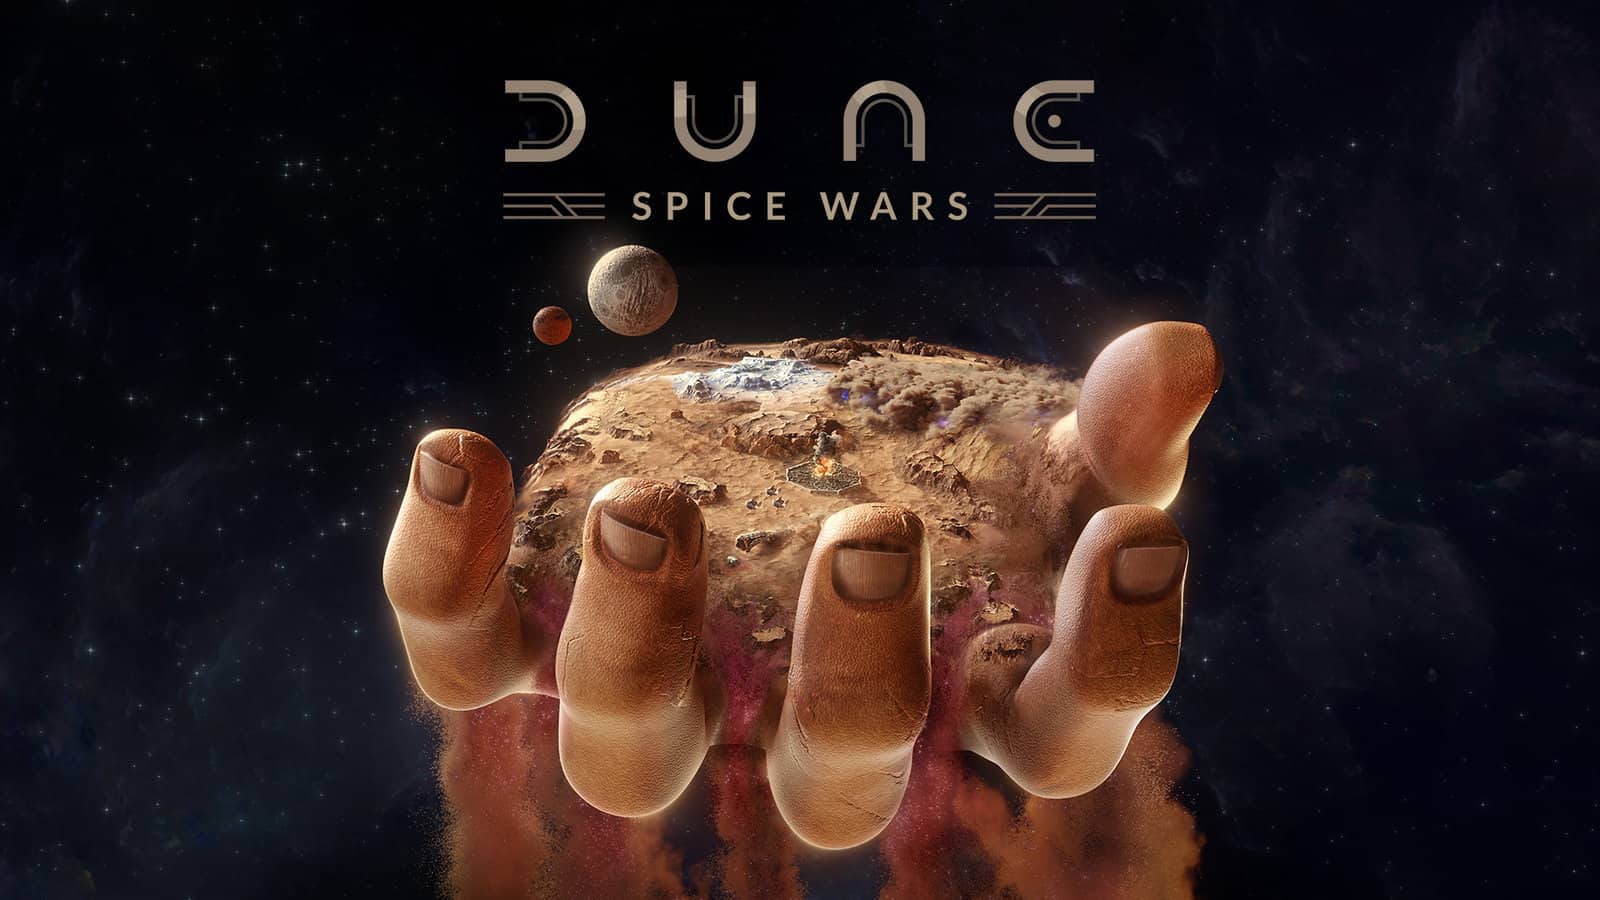 Dune_Spice_Wars_key_art_w_logo